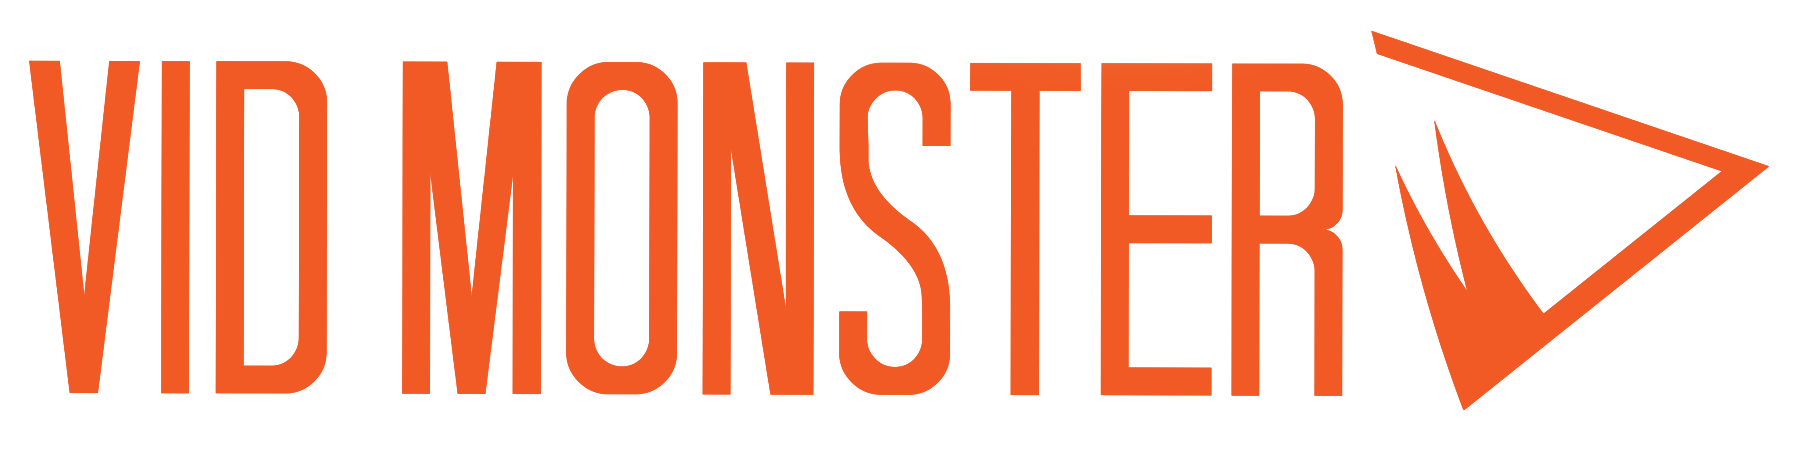 Vid Monster Productions logo